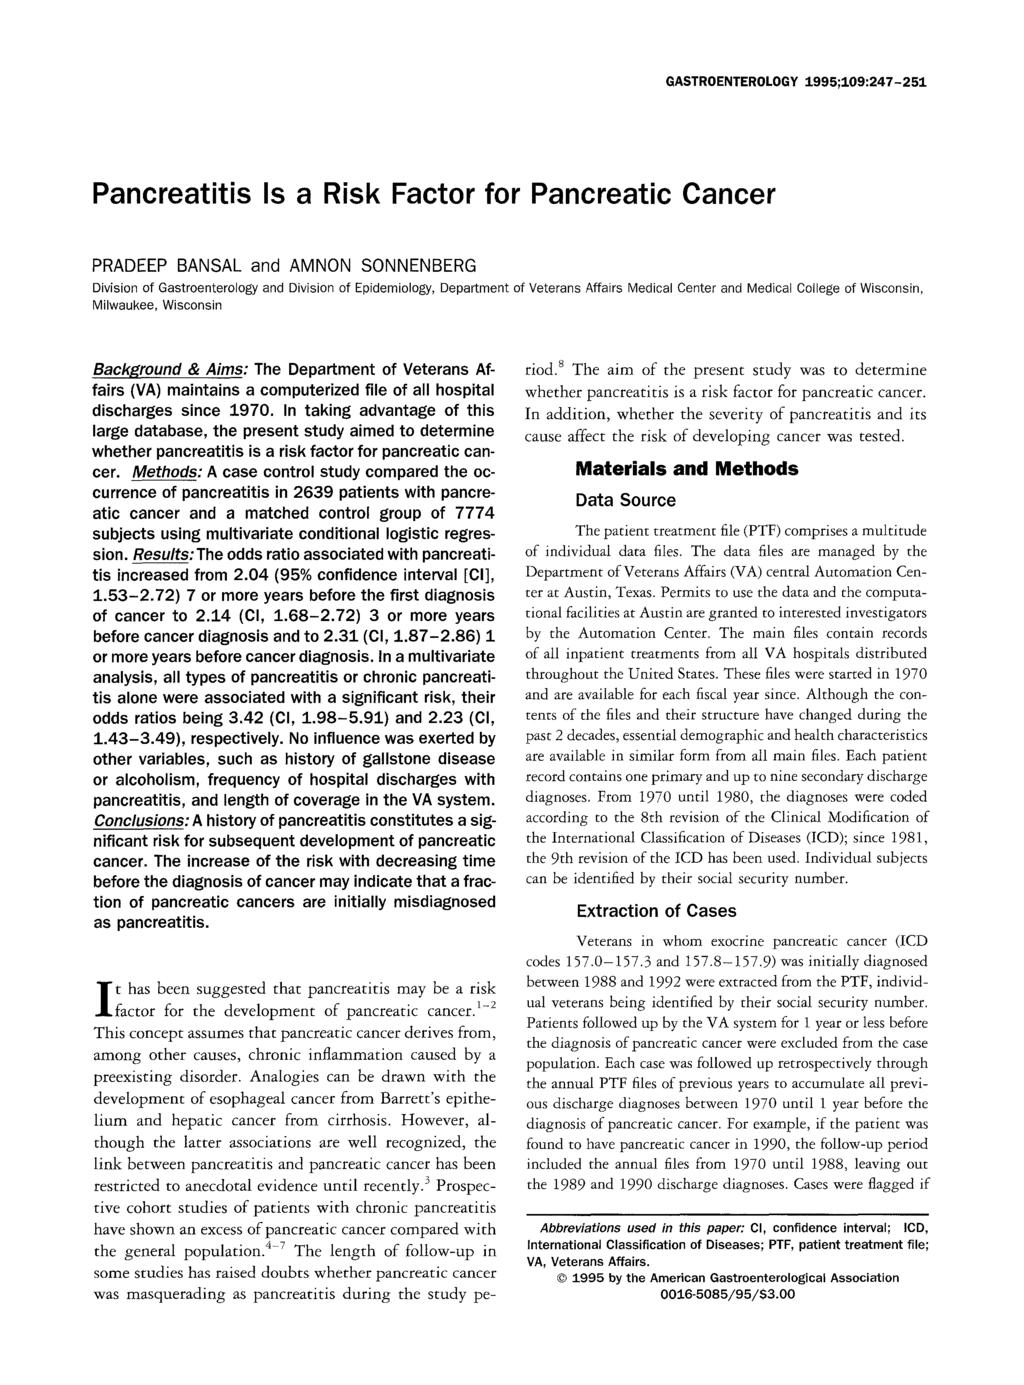 GASTROENTEROLOGY 1995;109:247-251 Pancreatitis Is a Risk Factor for Pancreatic Cancer PRADEEP BANSAL and AMNON SONNENBERG Division of Gastroenterology and Division of Epidemiology, Department of